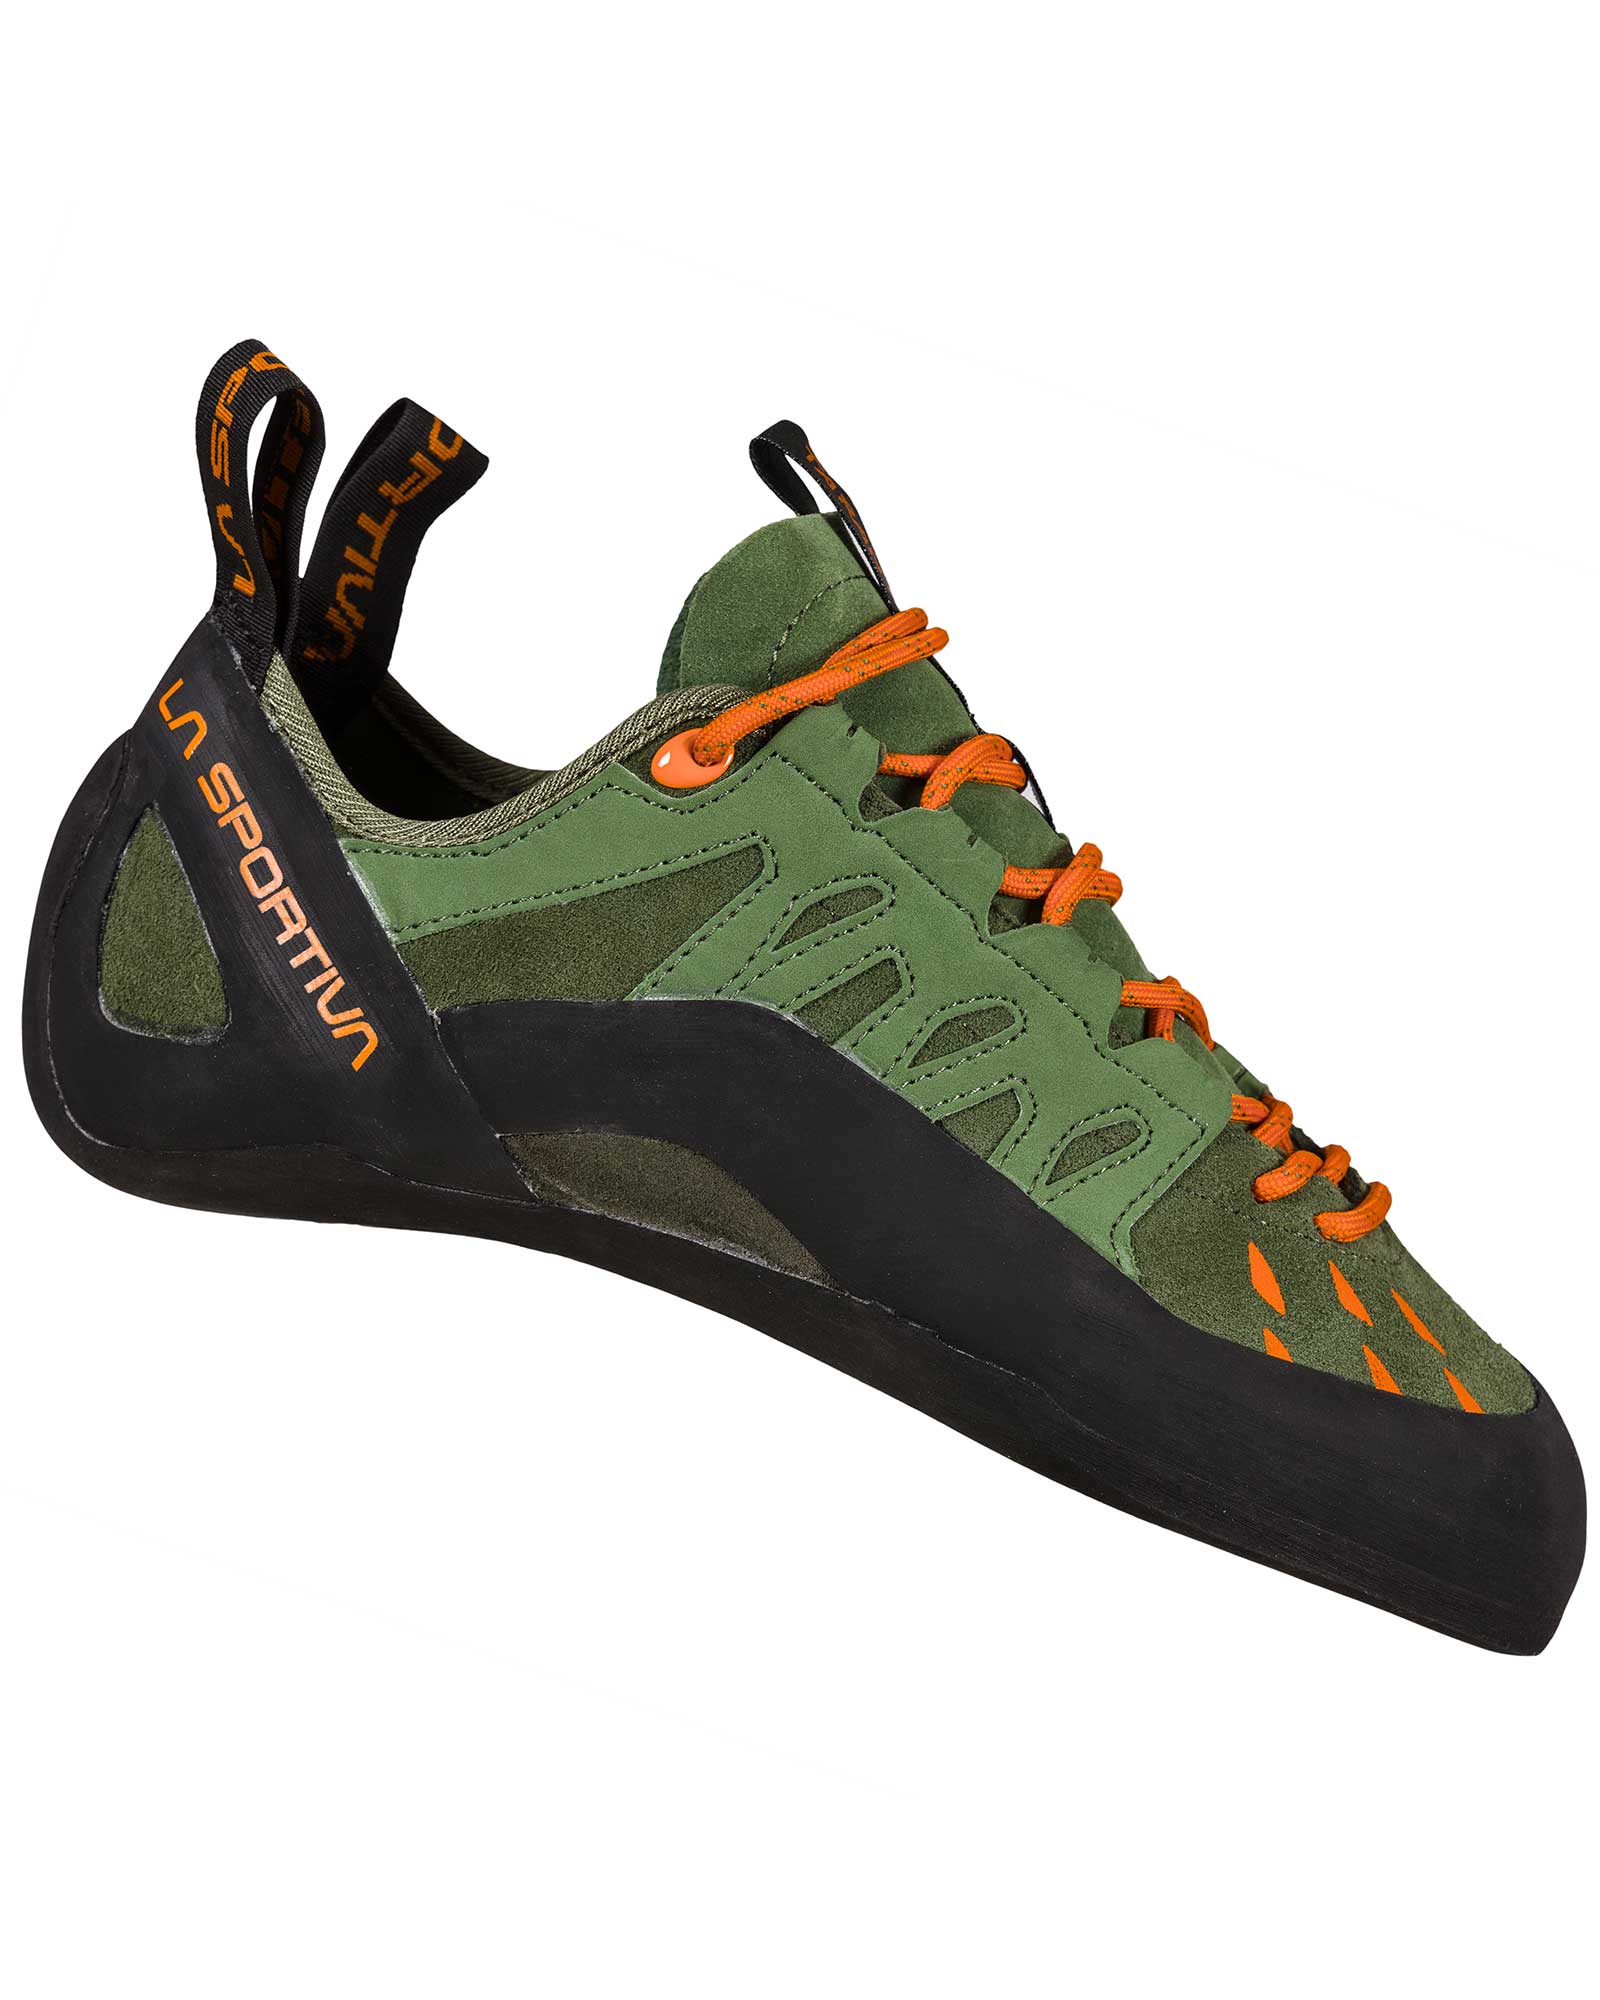 La Sportiva Tarantulace Men’s Shoes - Olive/Tiger EU 45